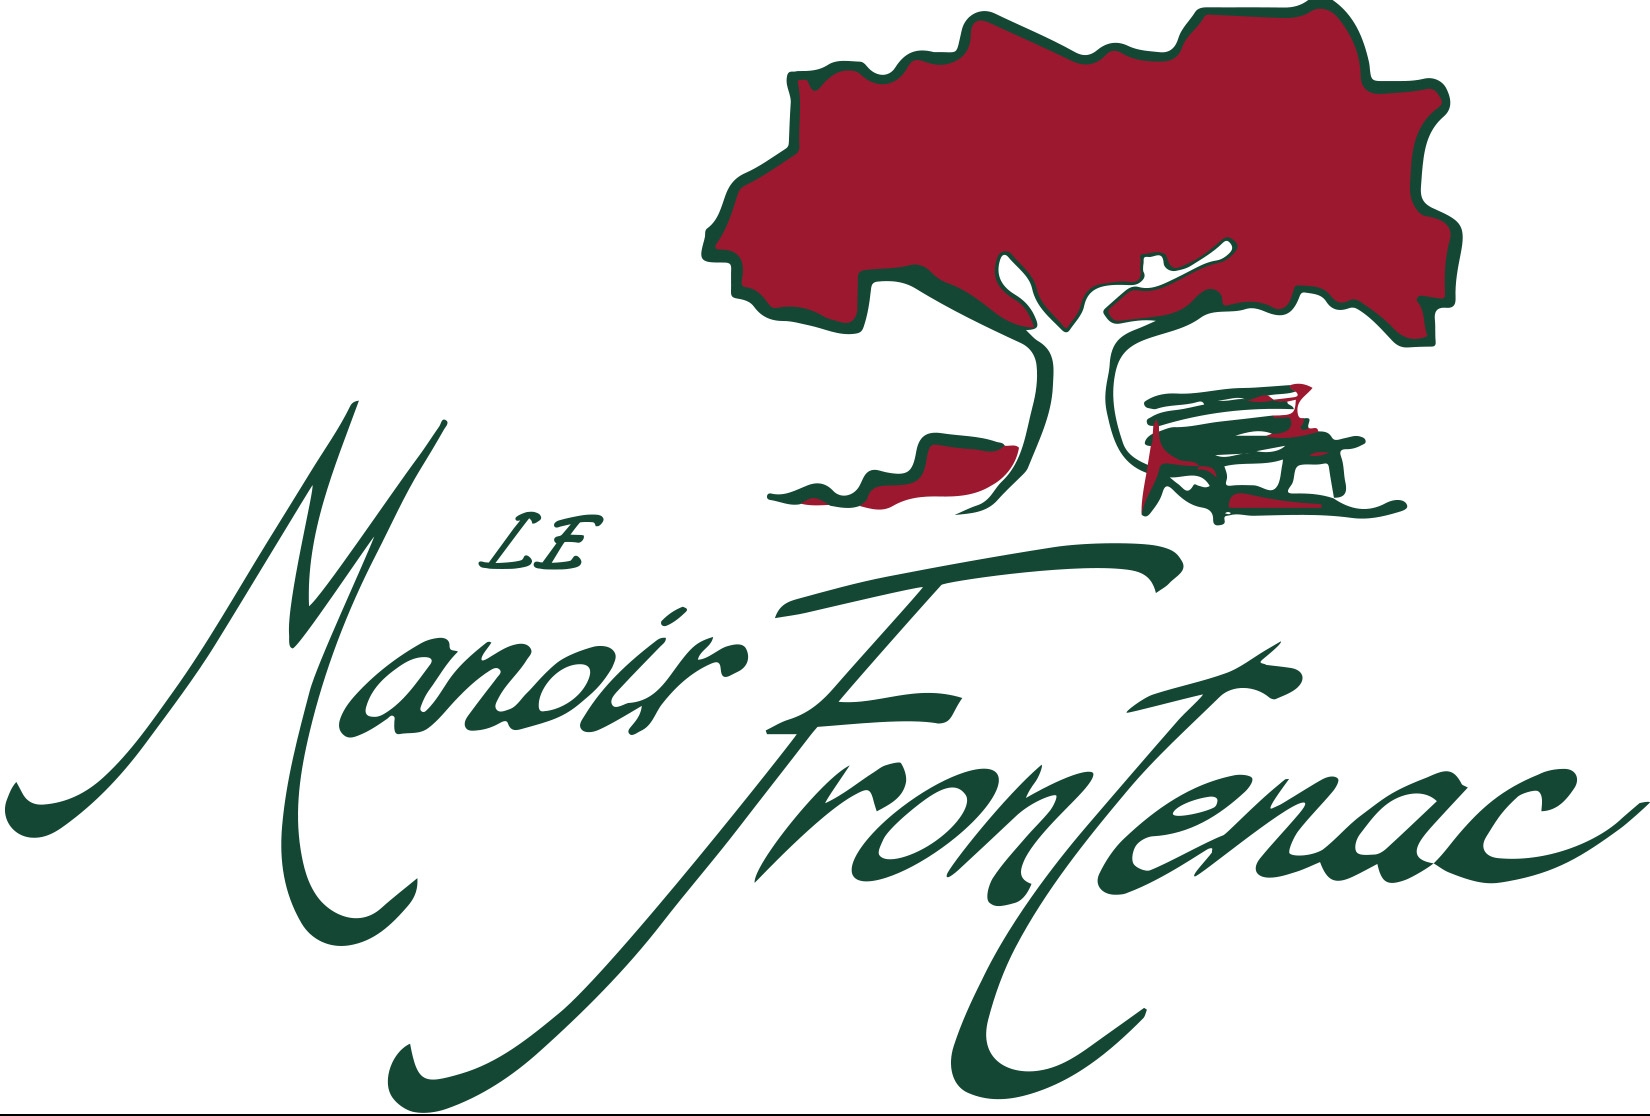 Le Manoir Frontenac